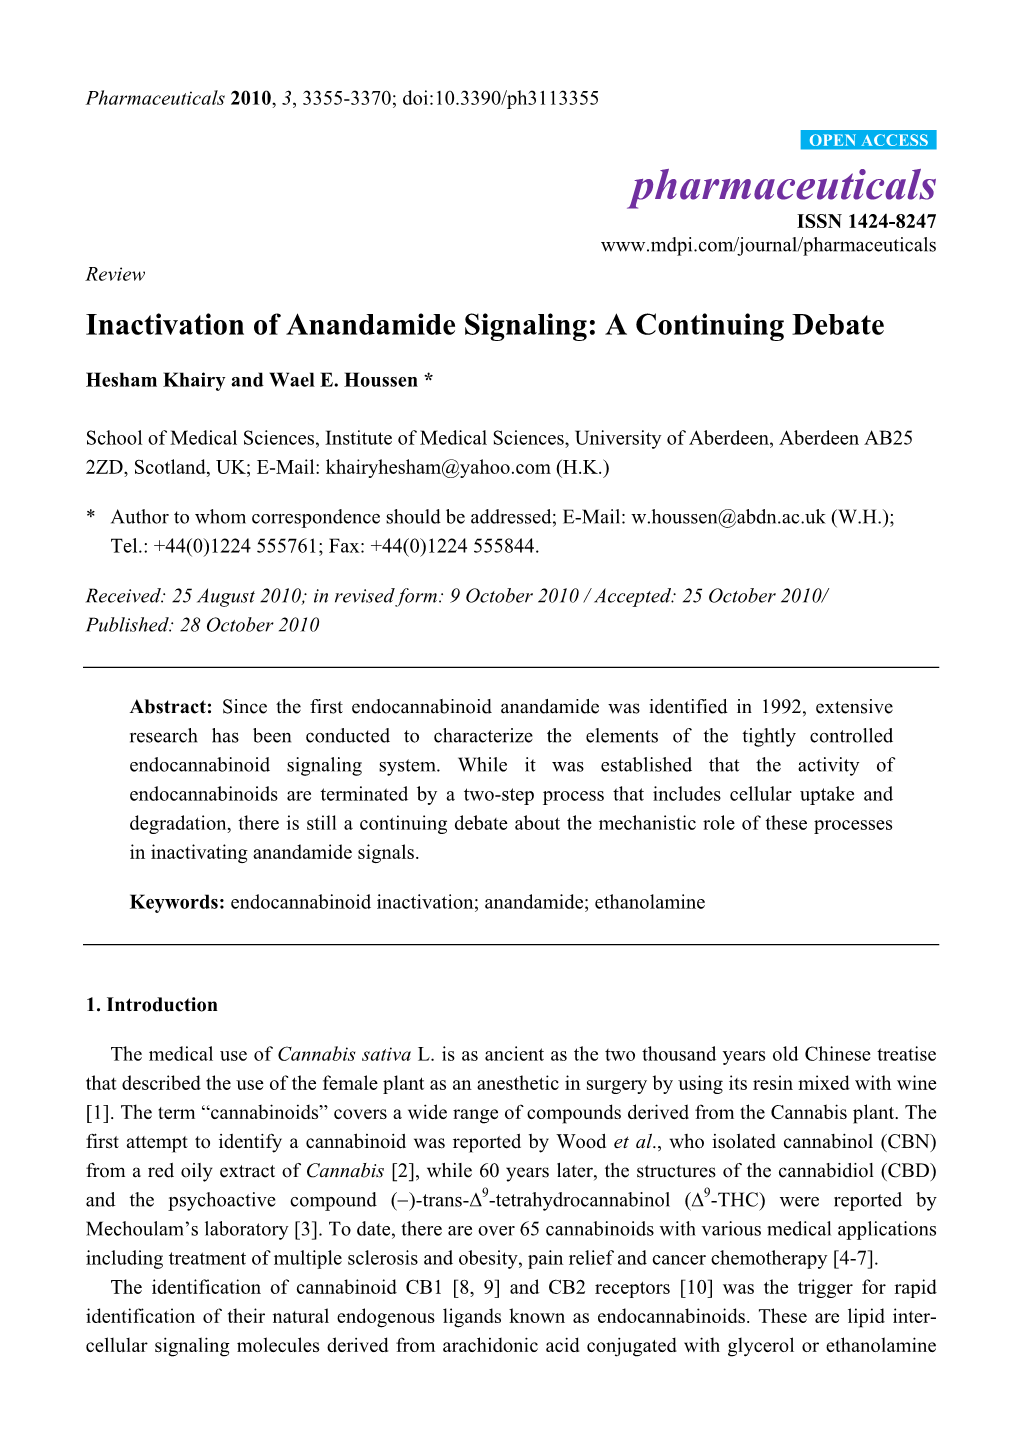 Inactivation of Anandamide Signaling: a Continuing Debate